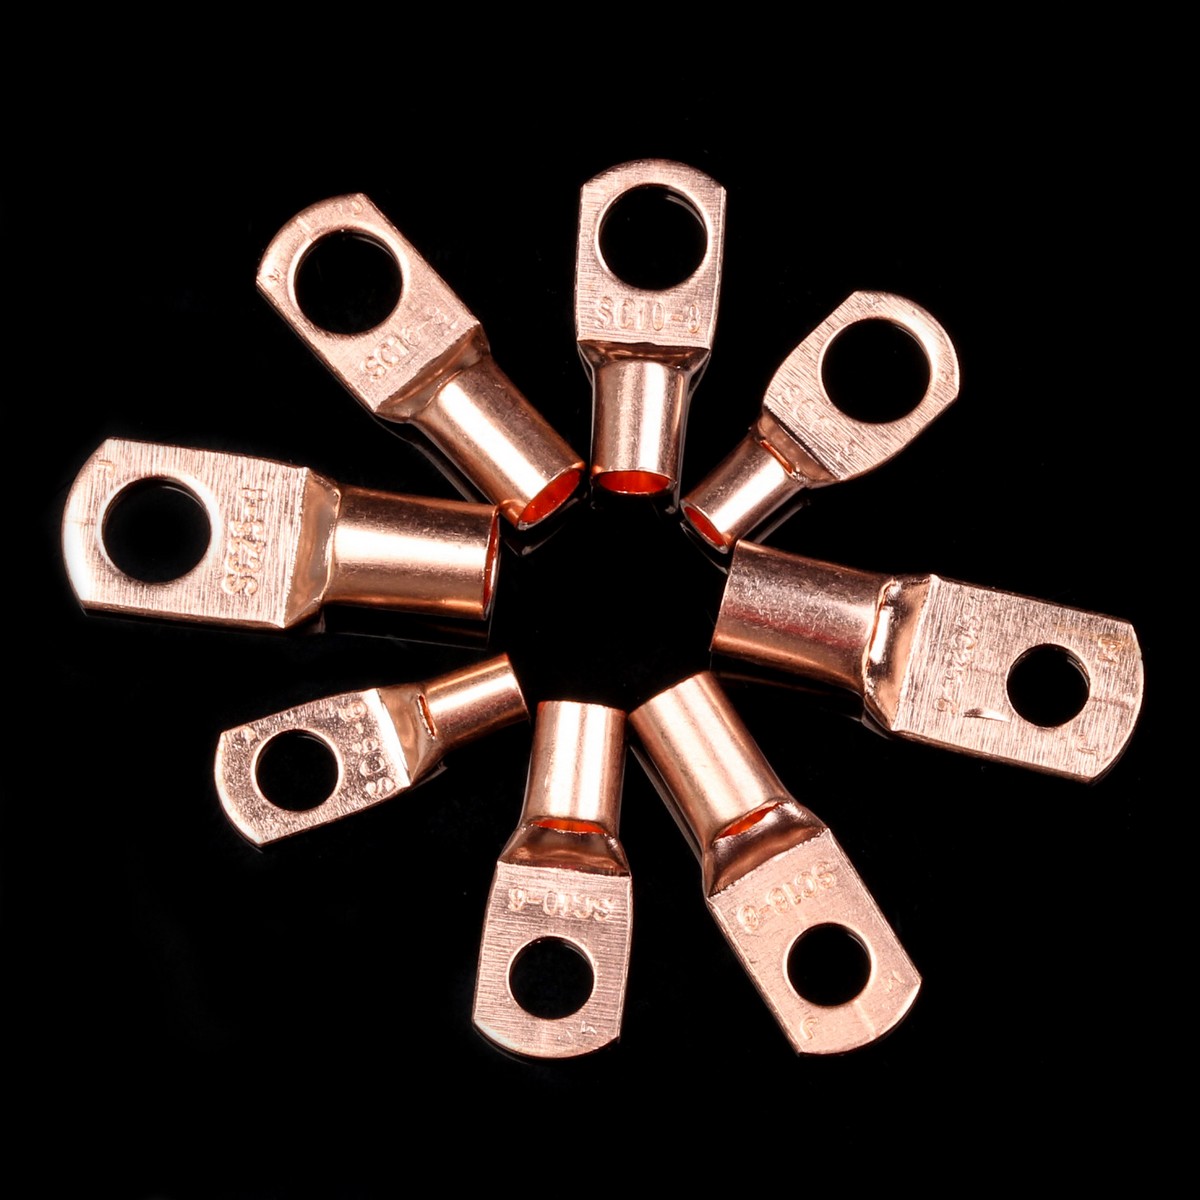 50Pcs Bolt Hole Tinned Copper Lugs Ring Battery Terminals SC6-6 SC6-8 SC10-6 Bare Cable Electric Crimp Wire Connectors Kit